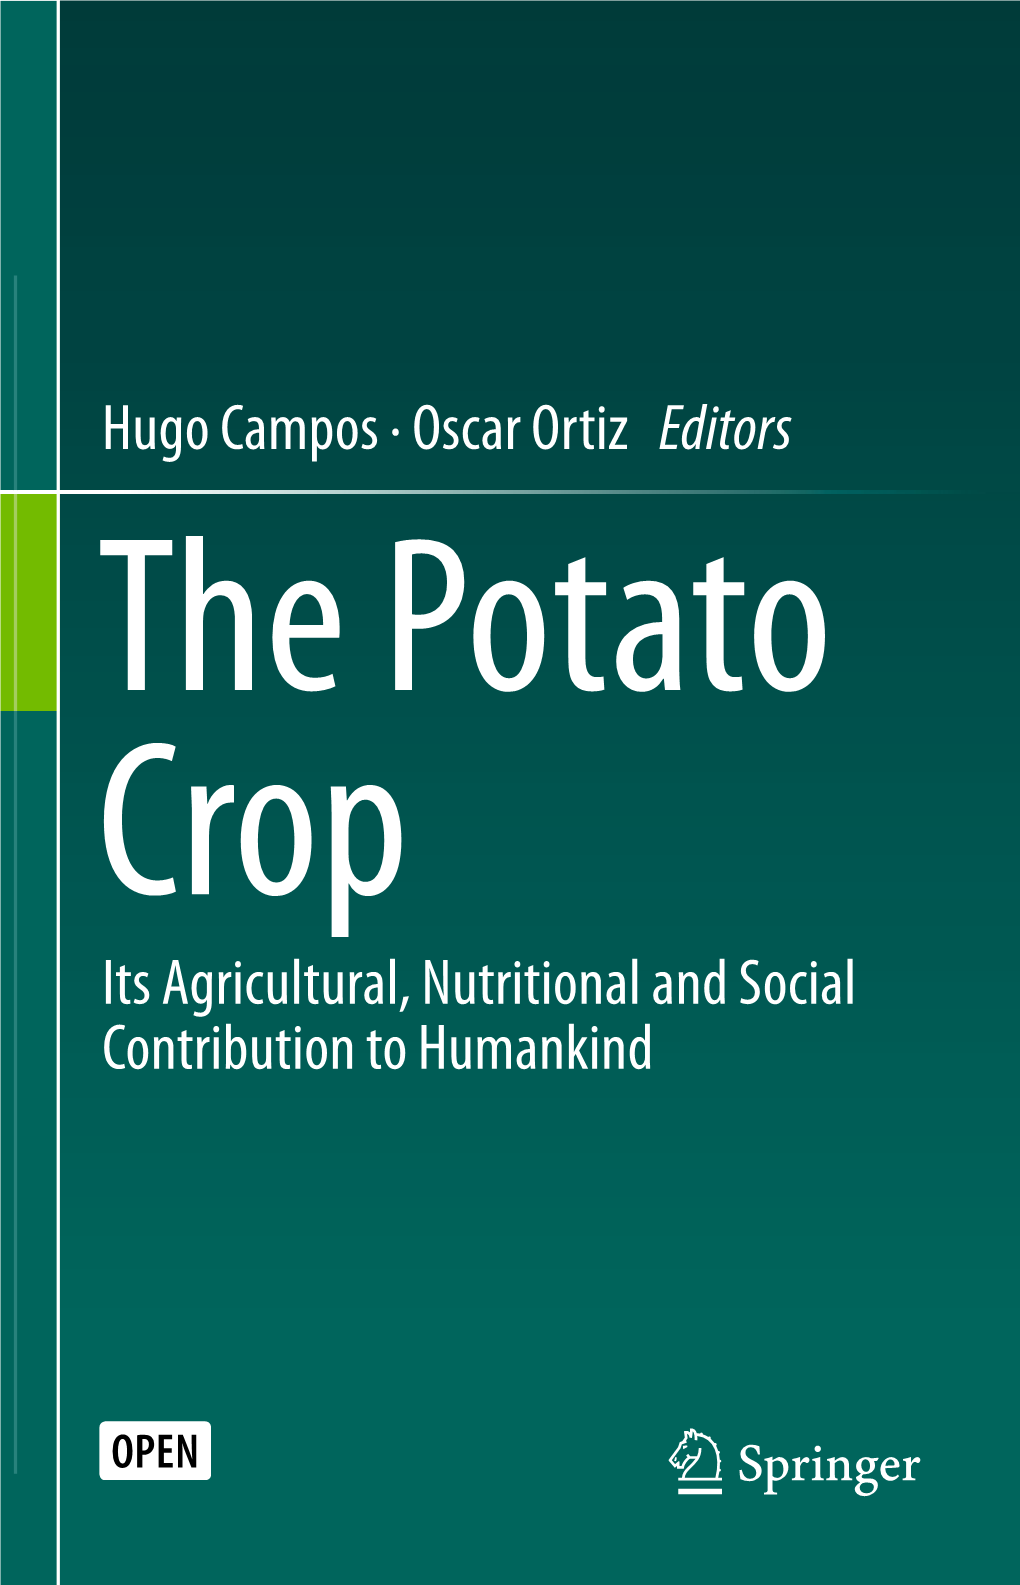 Hugo Campos · Oscar Ortiz Editors the Potato Crop Its Agricultural, Nutritional and Social Contribution to Humankind the Potato Crop Hugo Campos • Oscar Ortiz Editors